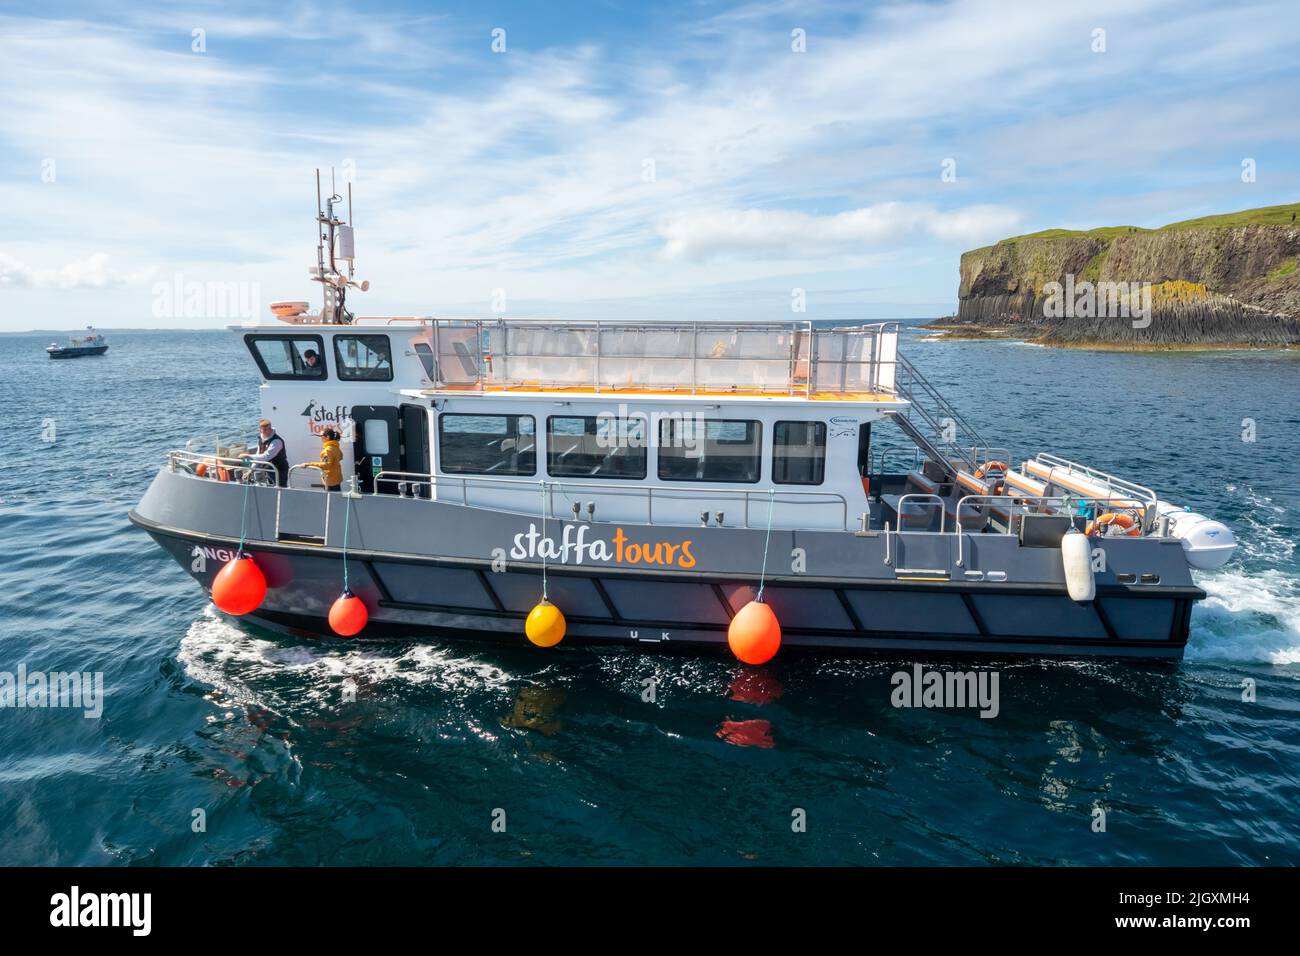 Staffa tours en barco Angus frente a la costa de Staffa, Escocia, Reino Unido Foto de stock